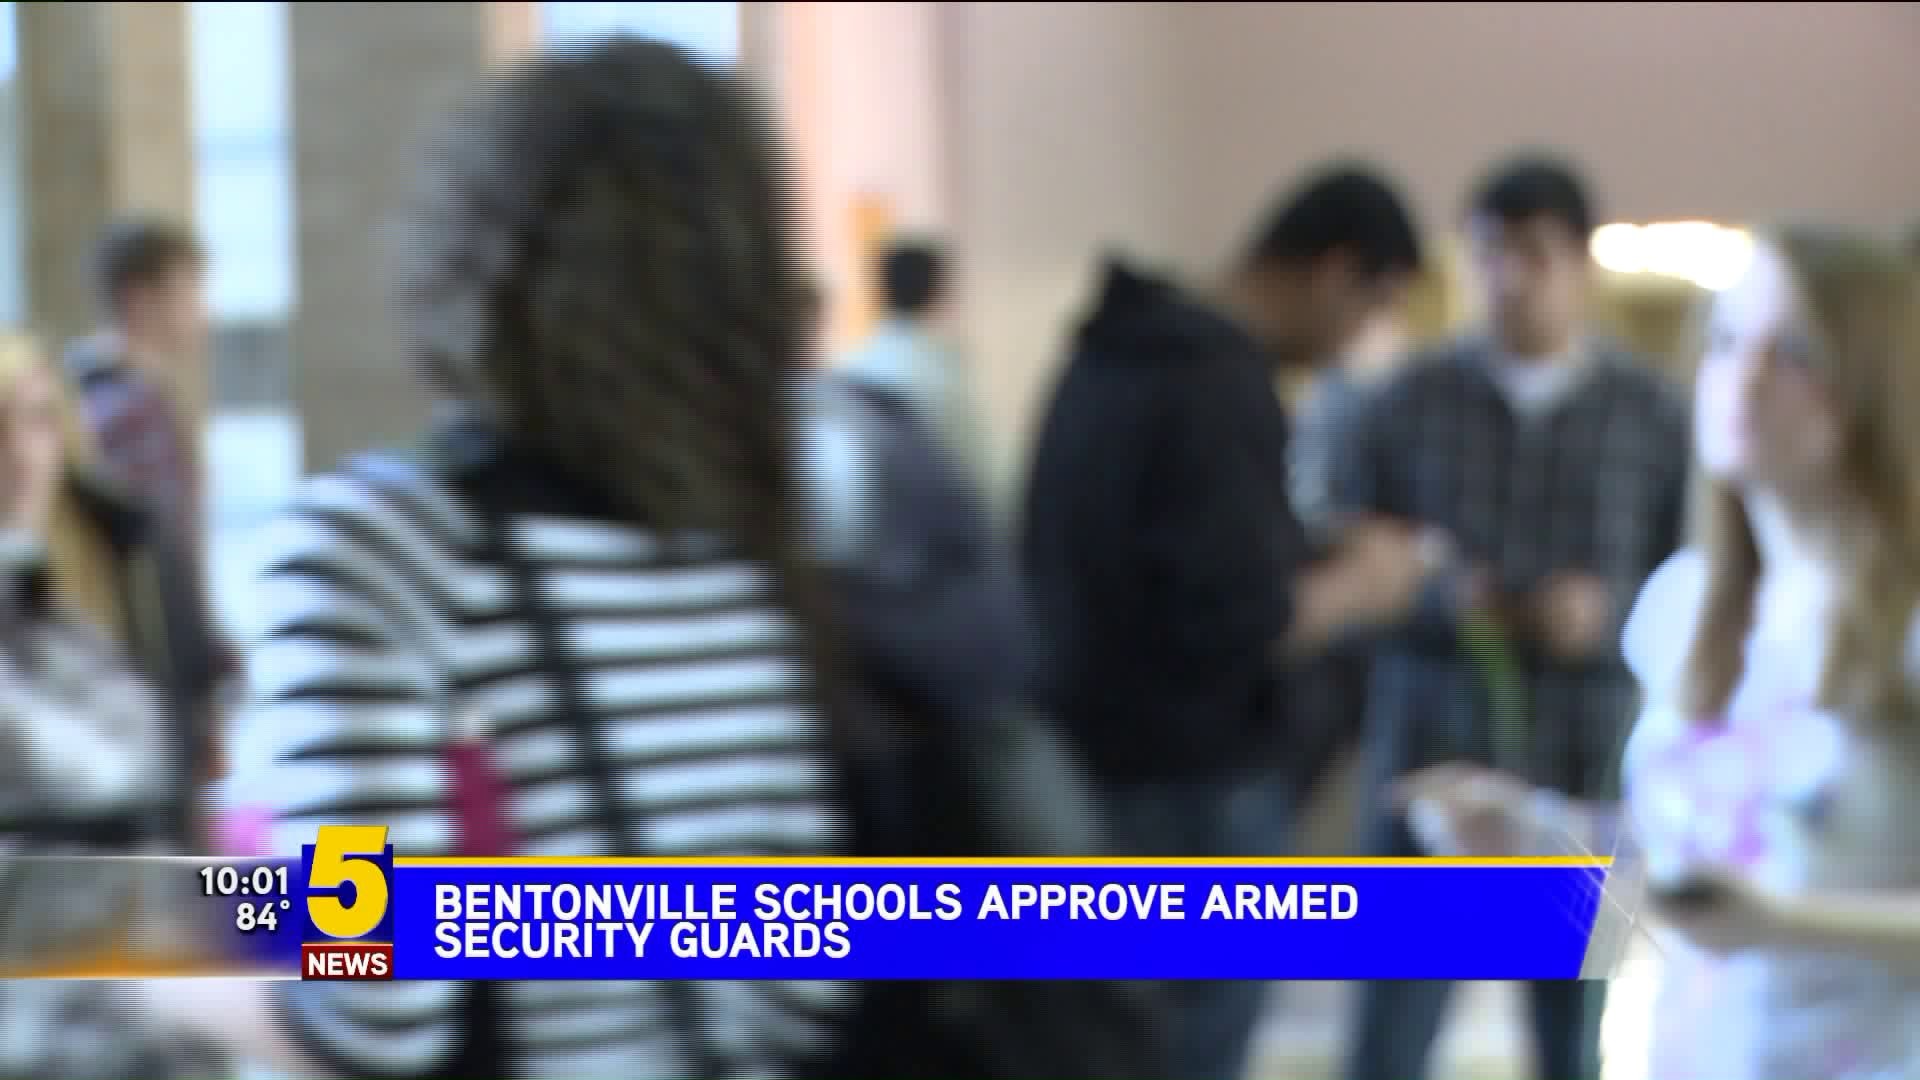 Bentonville Schools Approve Armed Security Guards